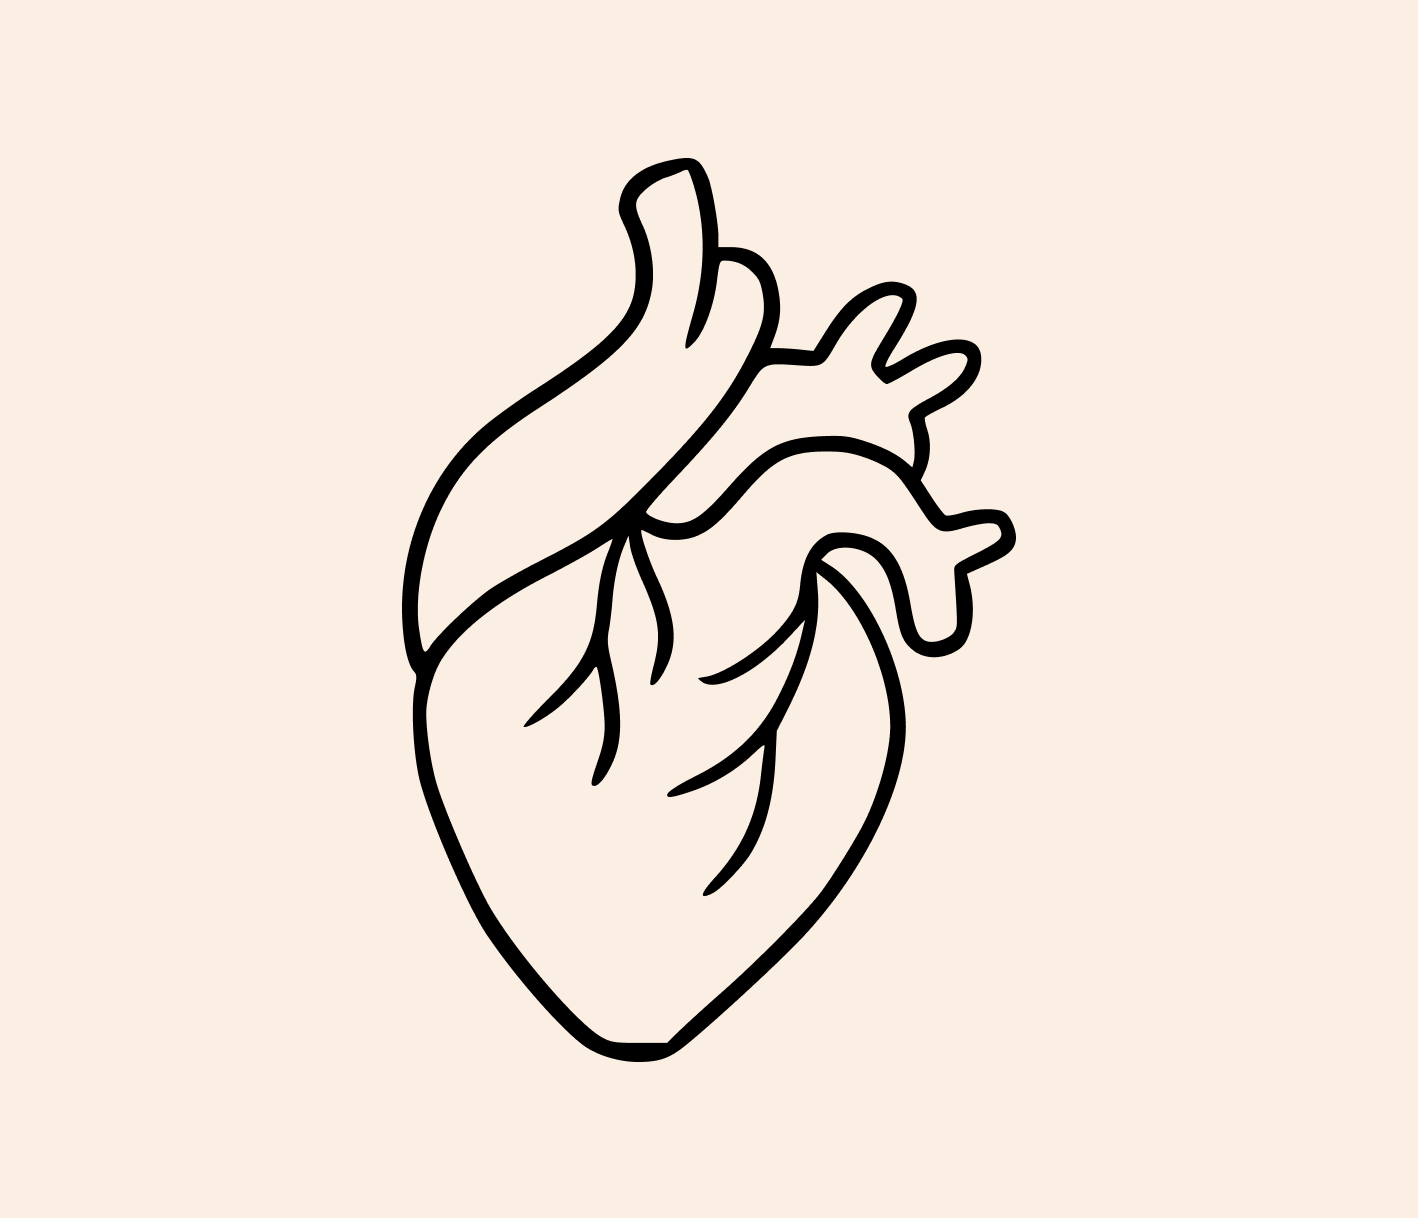 Heart tattoo design Royalty Free Vector Image - VectorStock